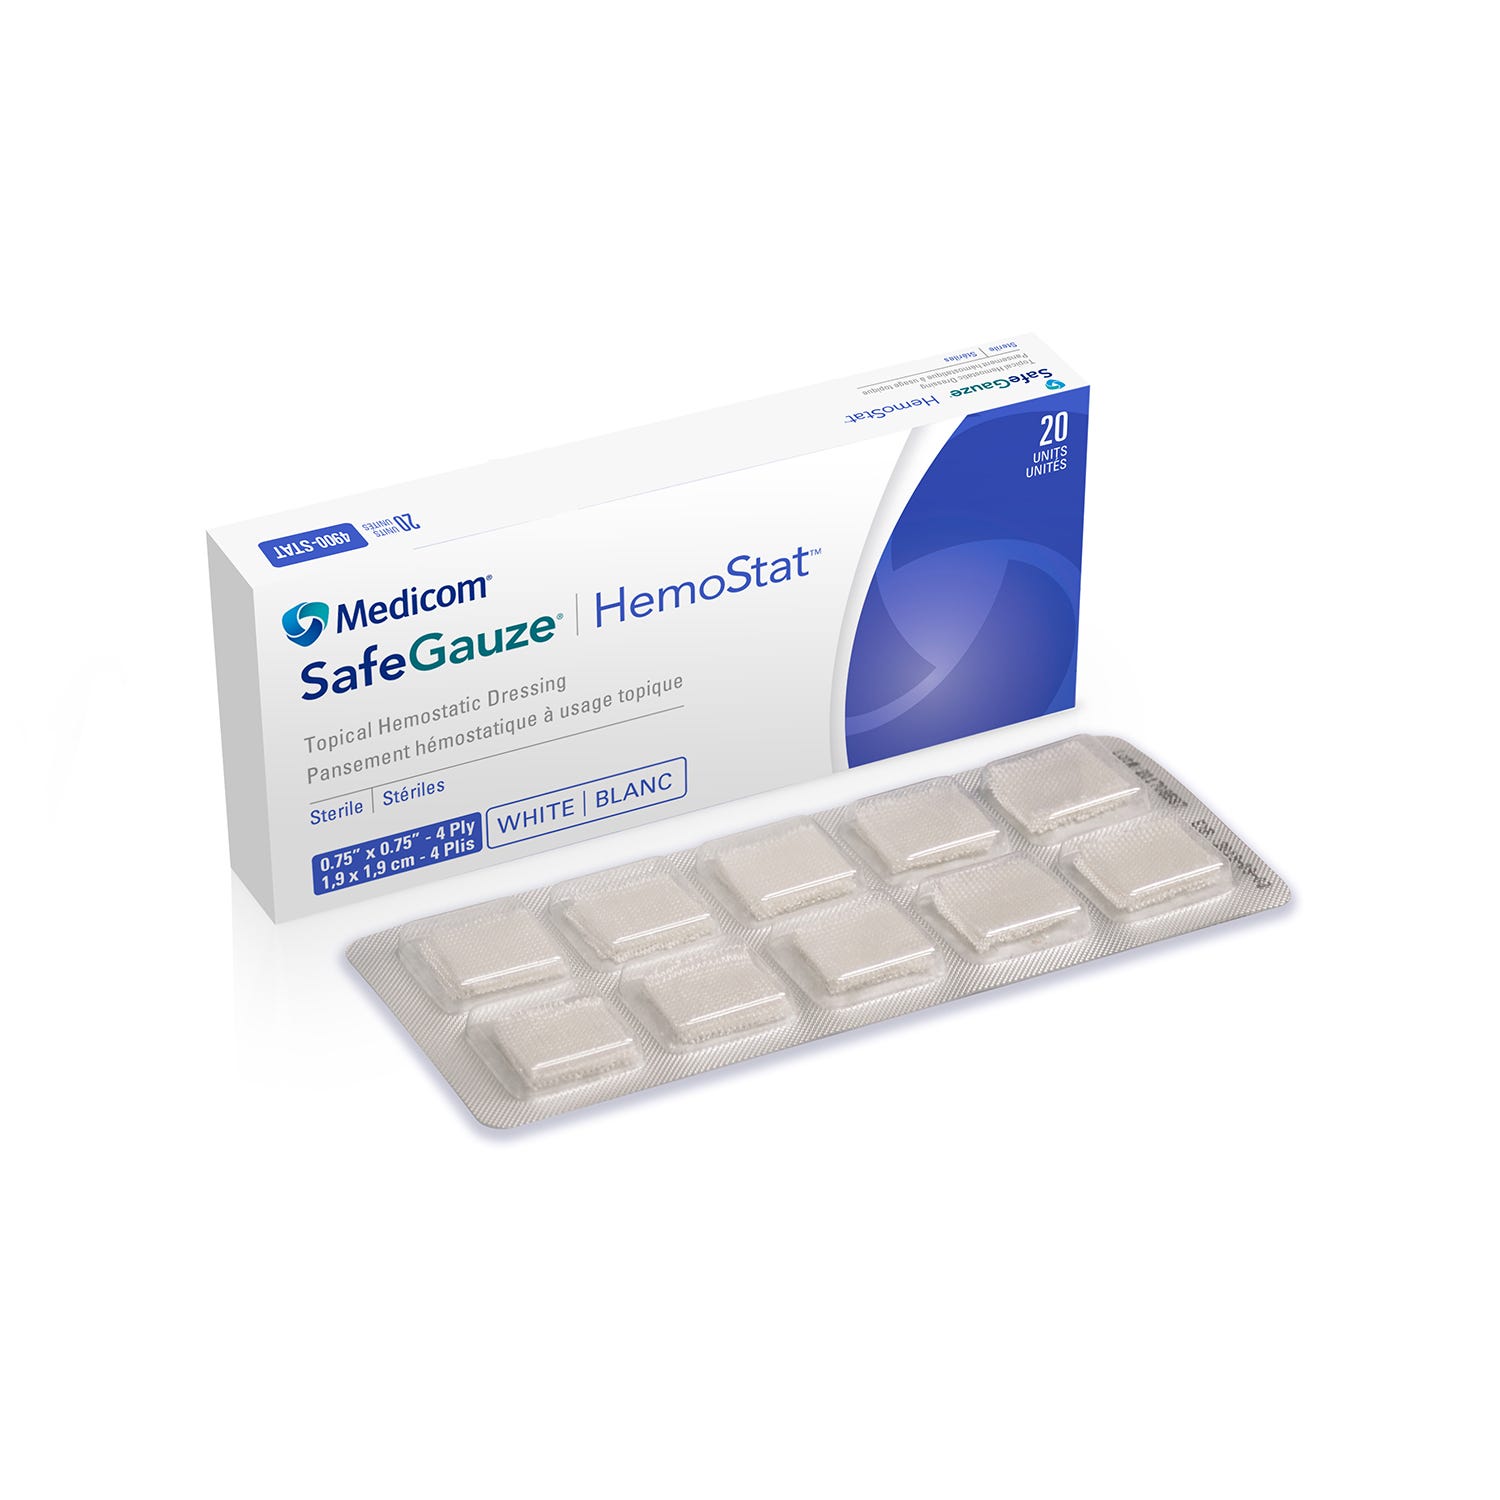 SafeGauze® HemoStat Topical Hemostatic Dressing, 0.75" x 0.75", 4ply, Sterile - 20/Box